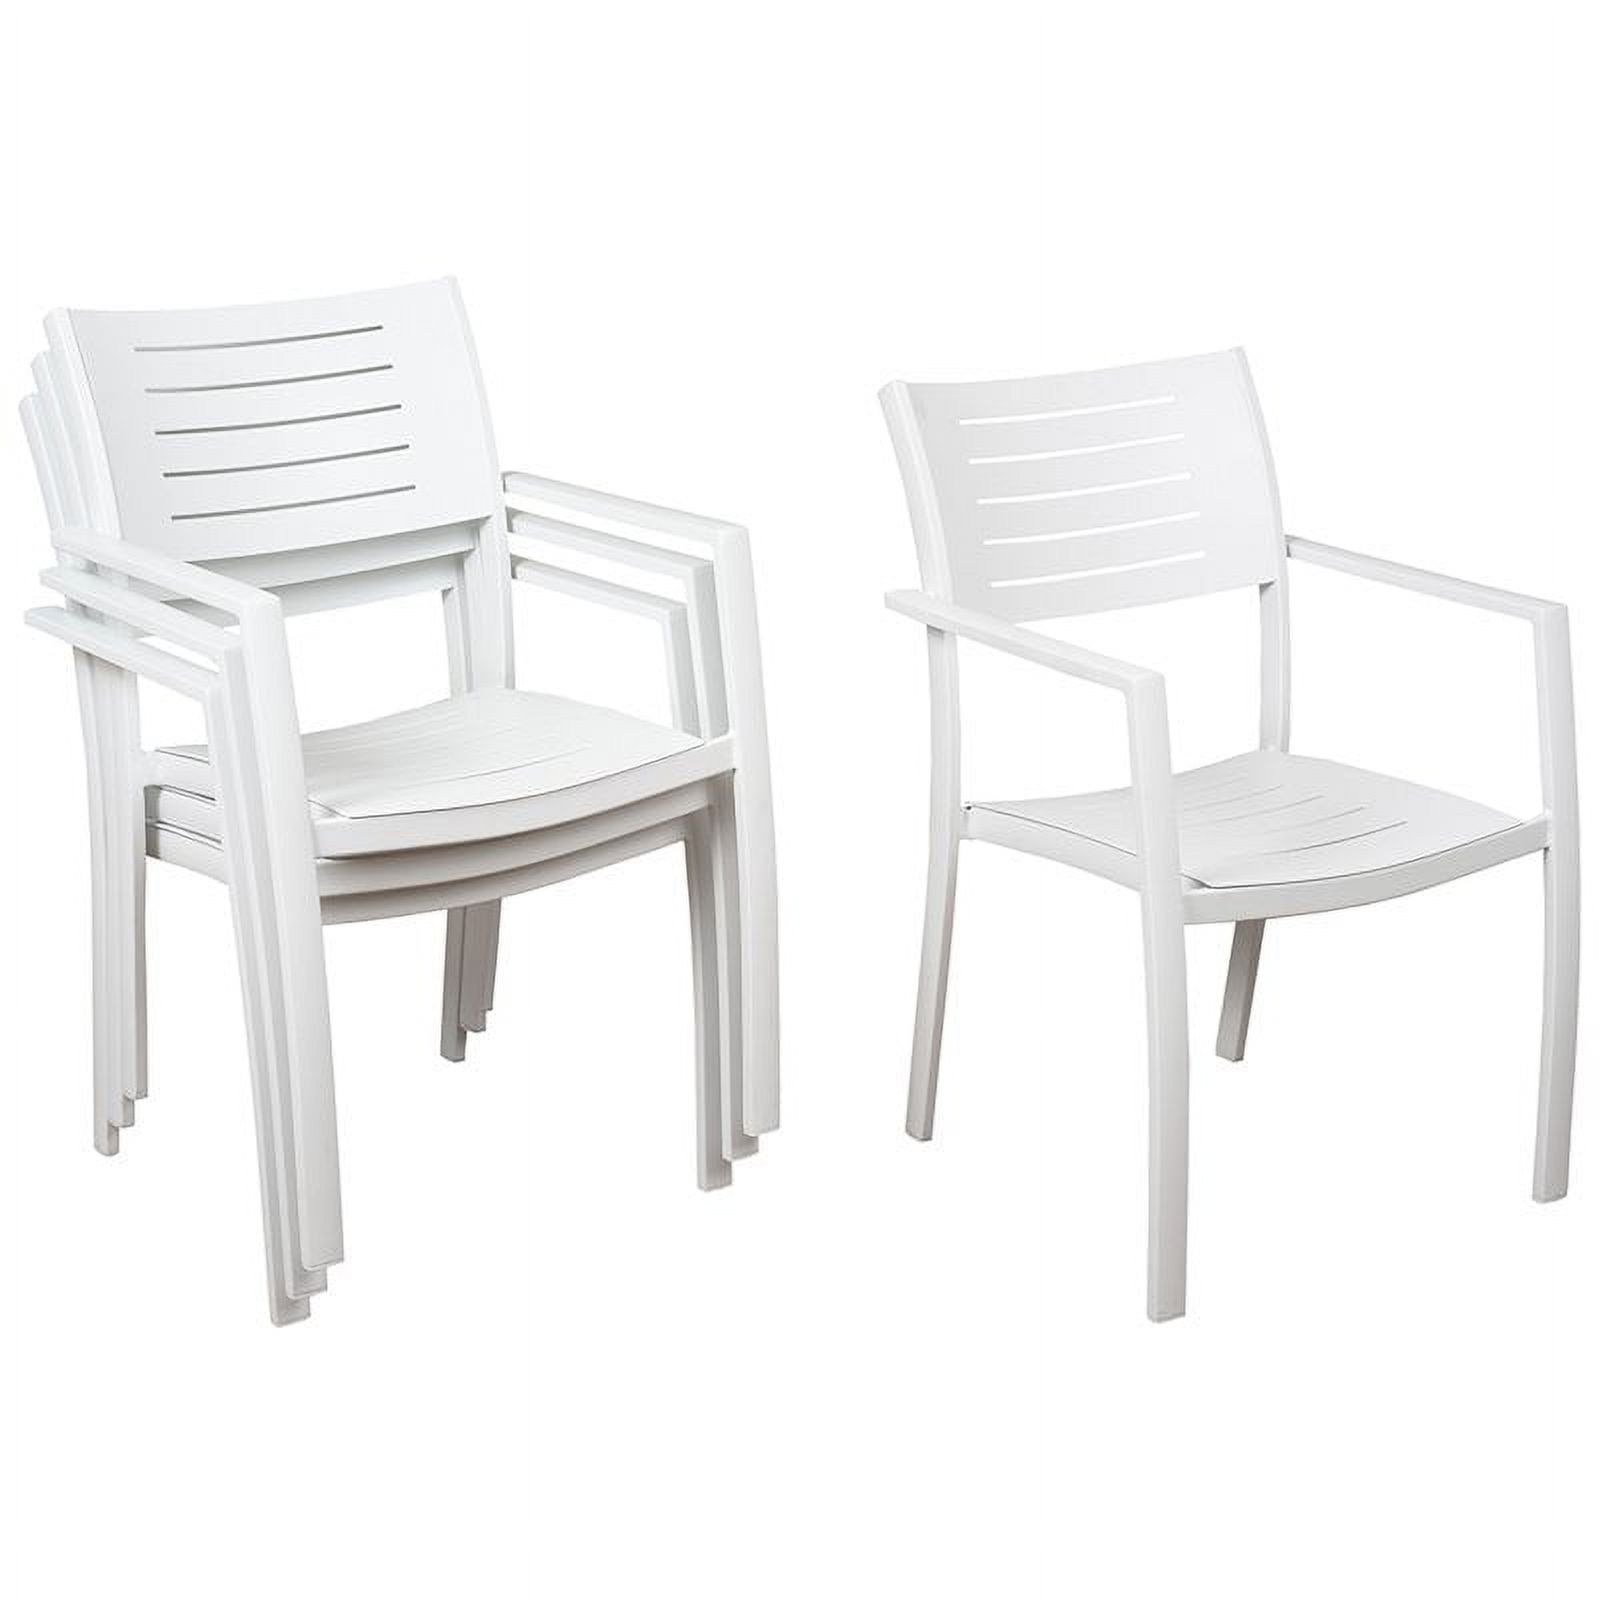 International Home Atlantic Noordam Patio Dining Arm Chair (Set of 4) - image 1 of 4